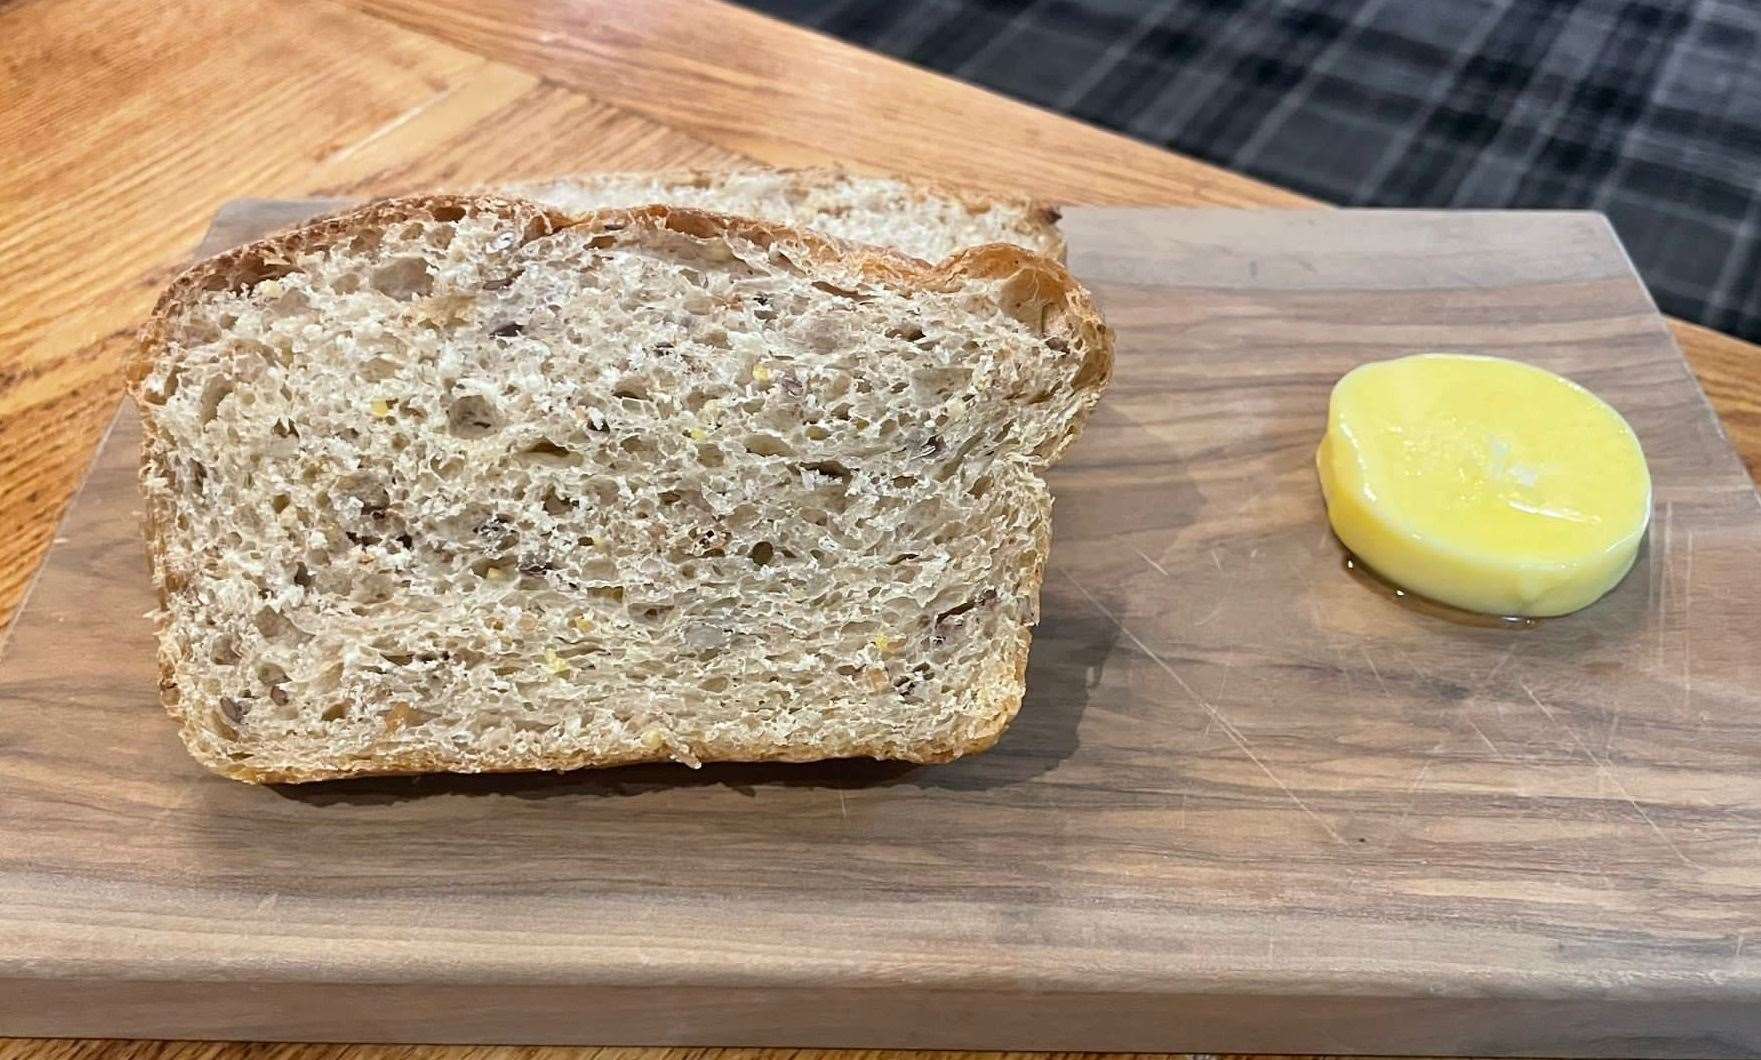 The beautiful aged grain bread. Picture: Chantelle Hurst